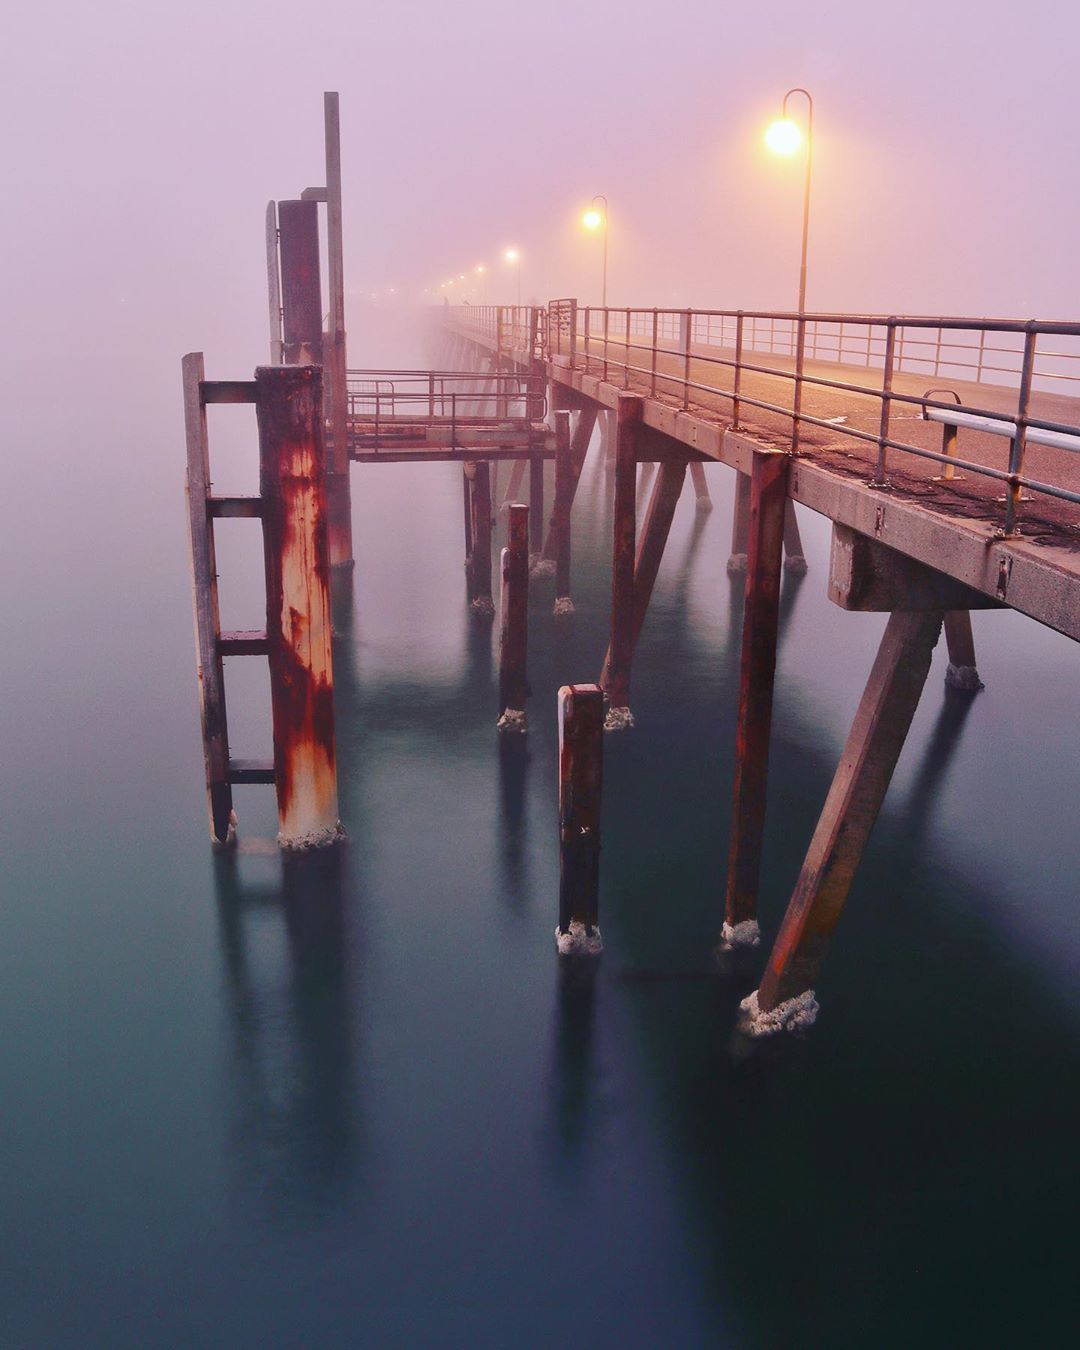 Foggy morning in South Australia